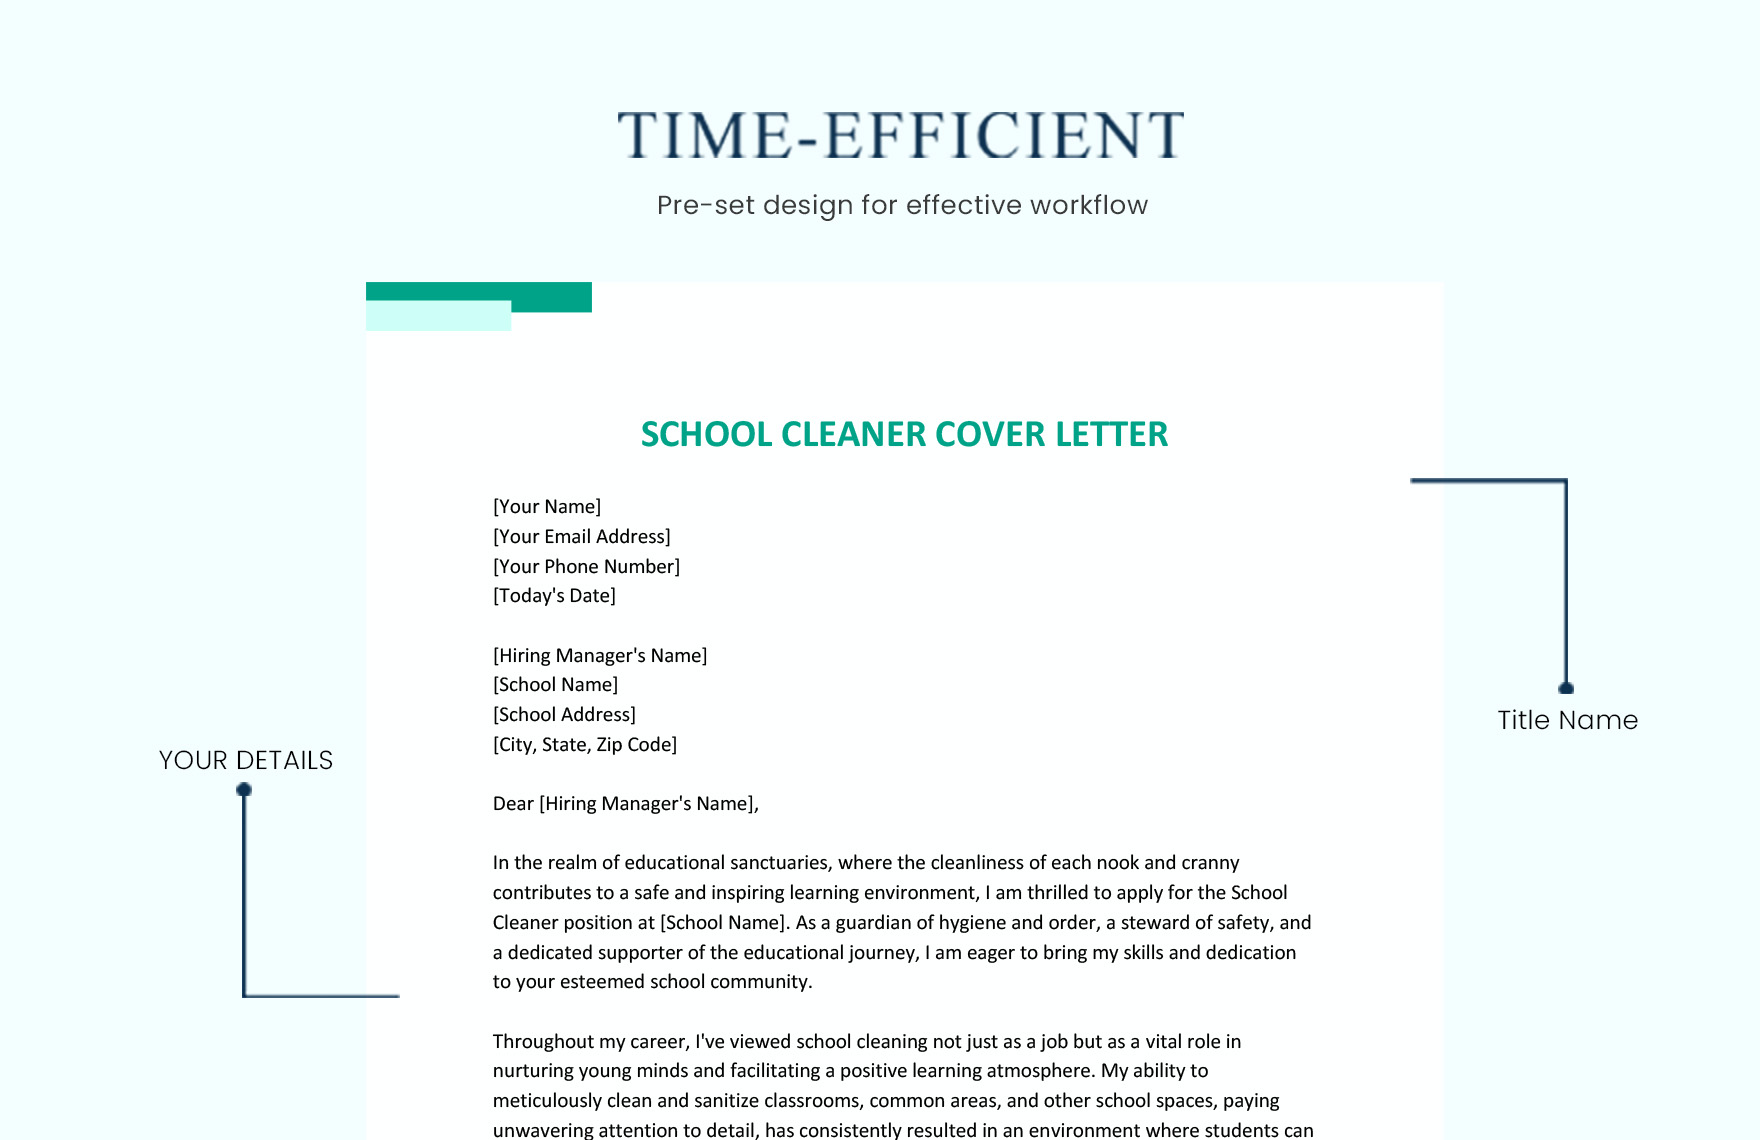 School Cleaner Cover Letter